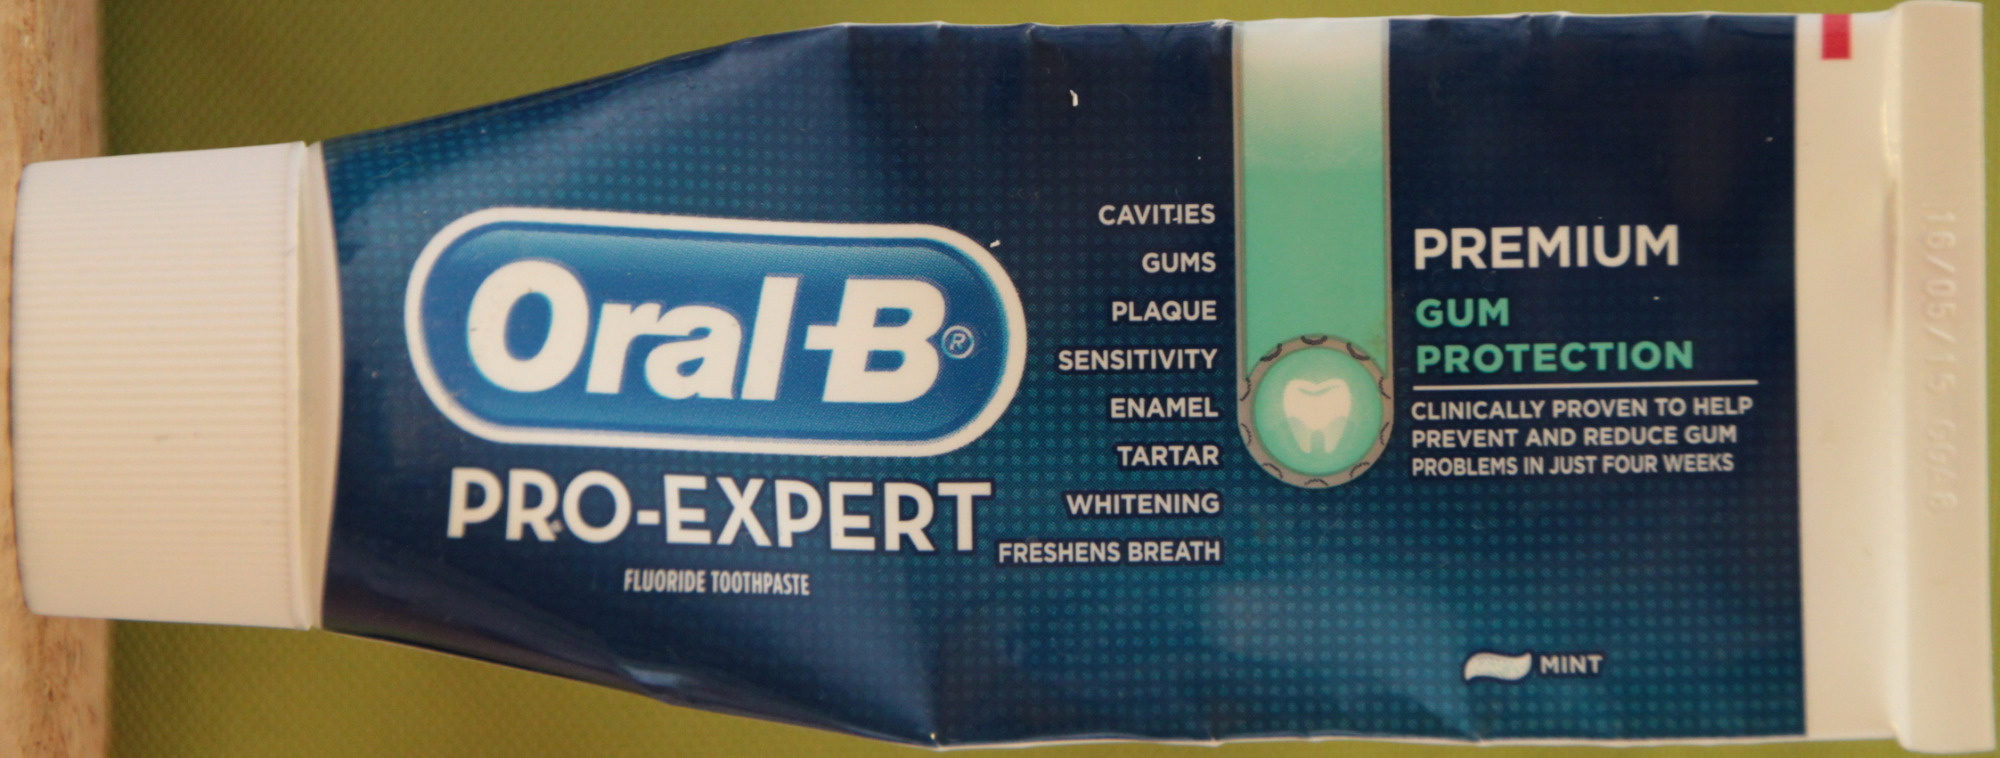 Pro-Expert Premium Gum Protection - Product - fr